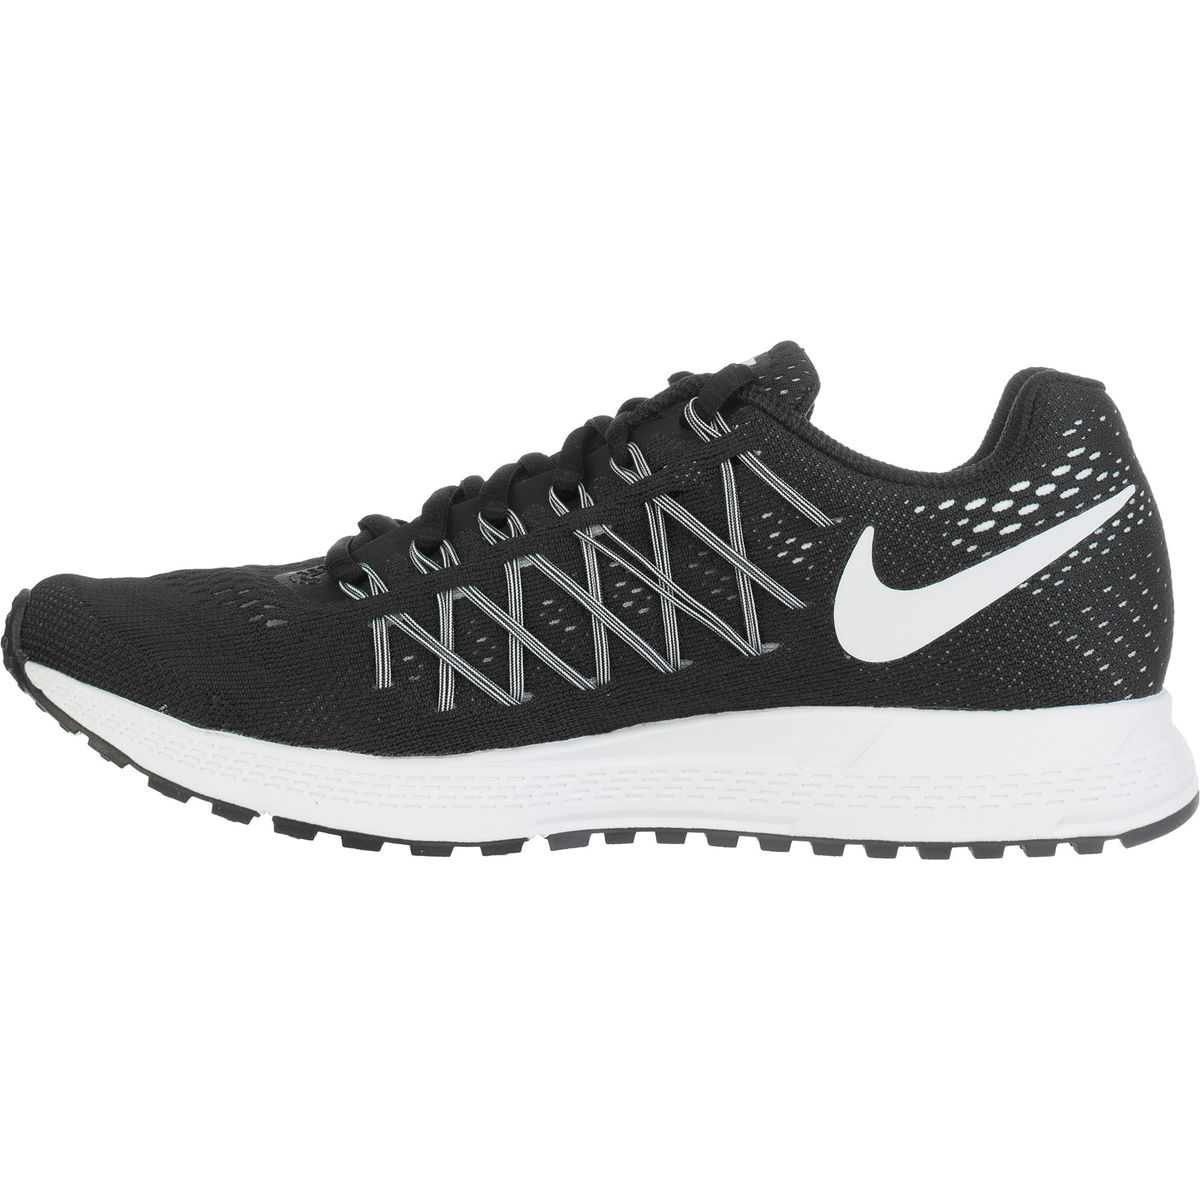 Nike Air Zoom Pegasus 32 Running Shoe - Women's - Footwear